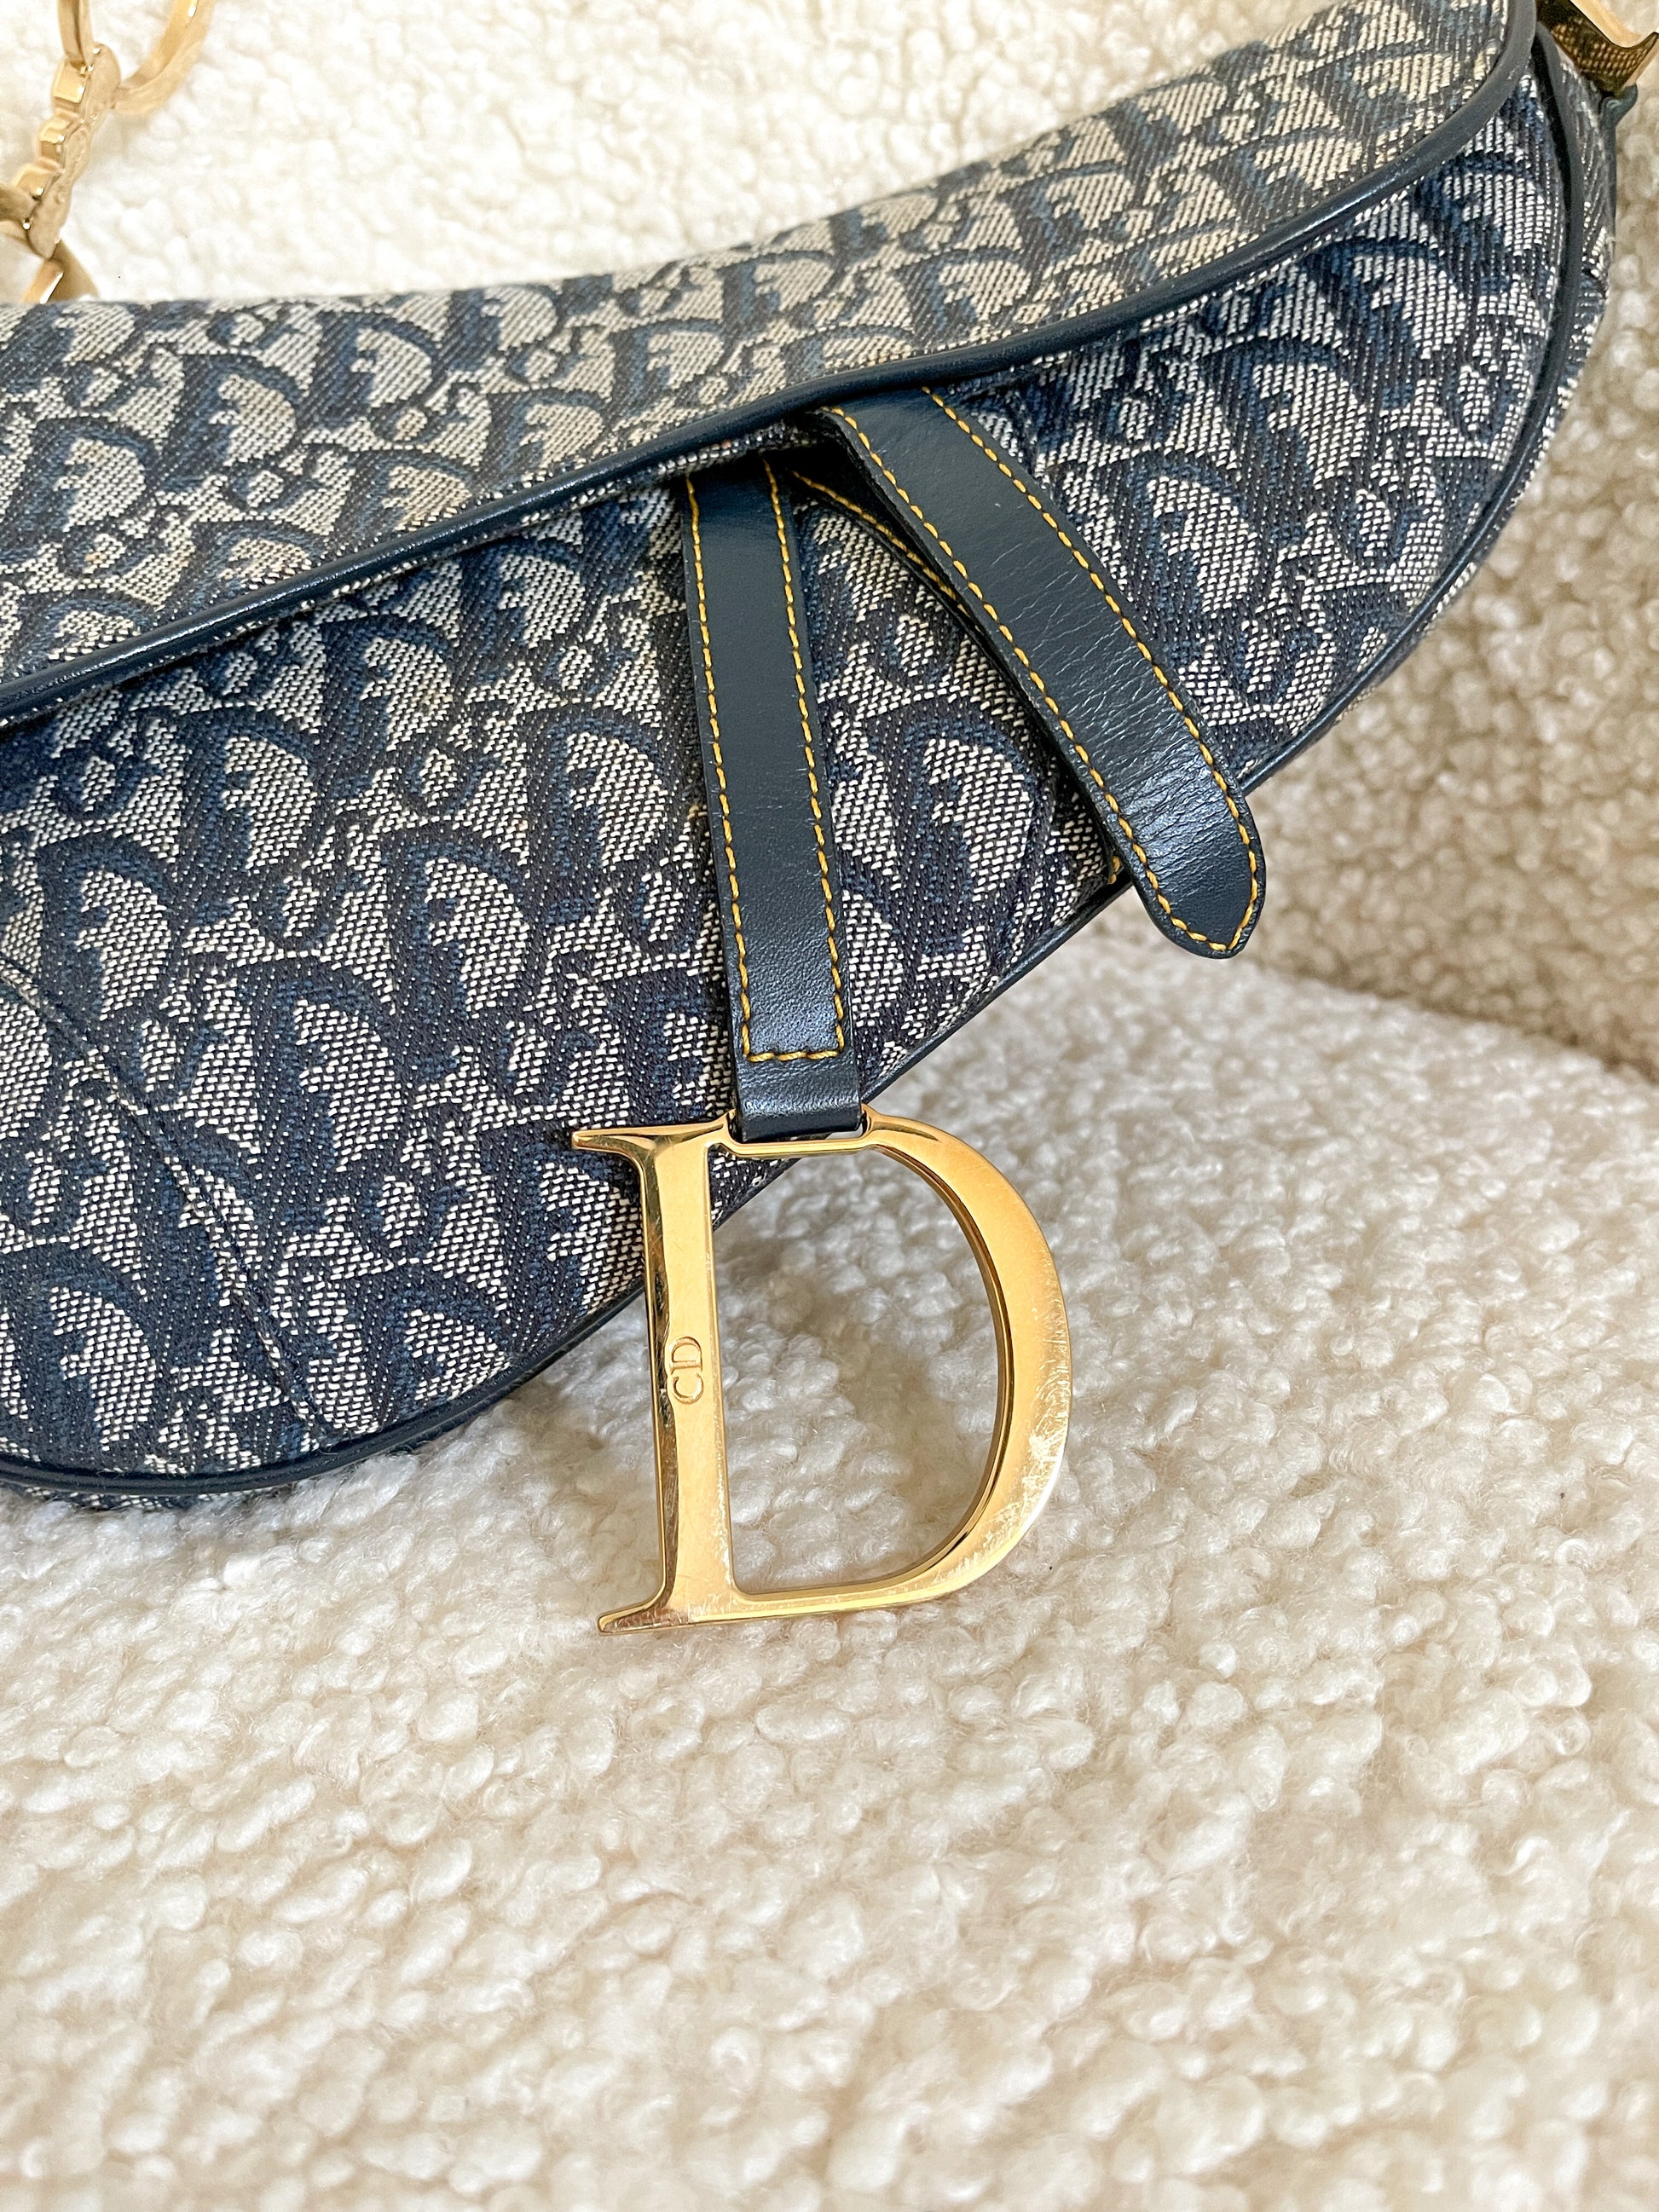 Christian Dior Vintage Golf Bag 